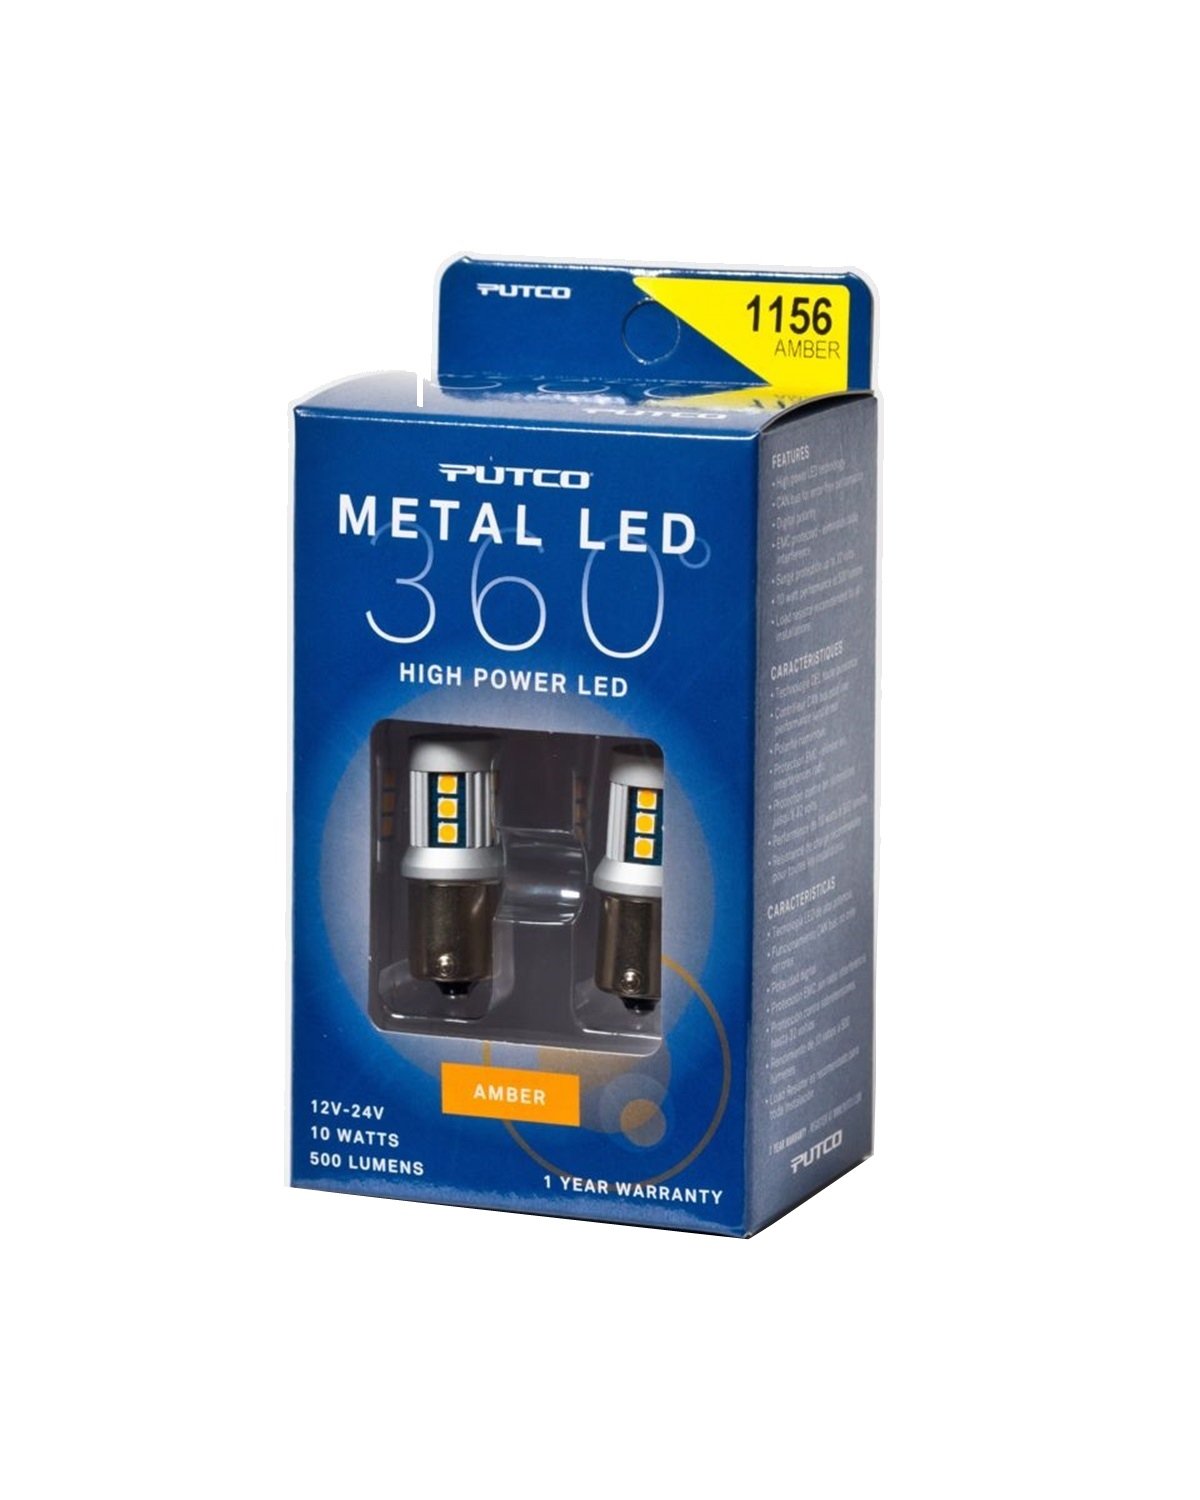 Putco 343156A-360 Metal LED Bulb, 1 Pack